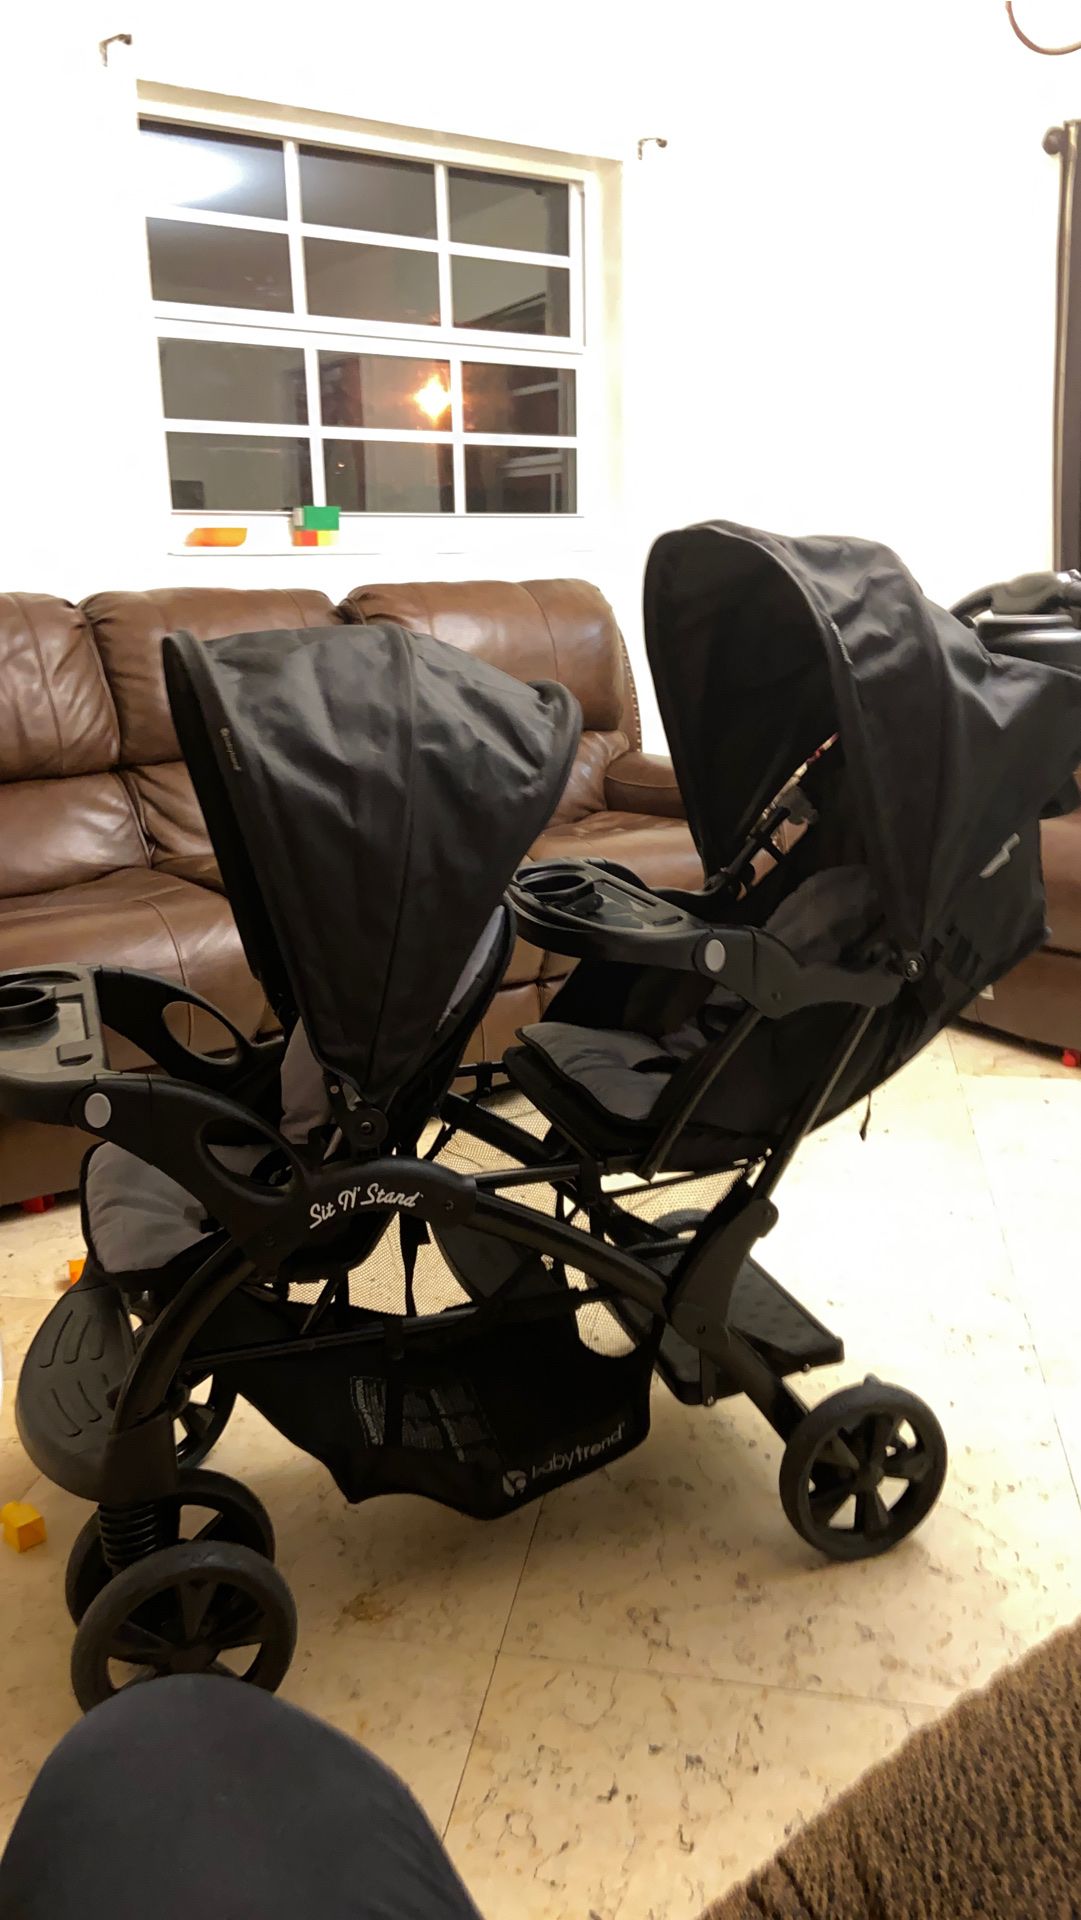 Babytrend double stroller $150